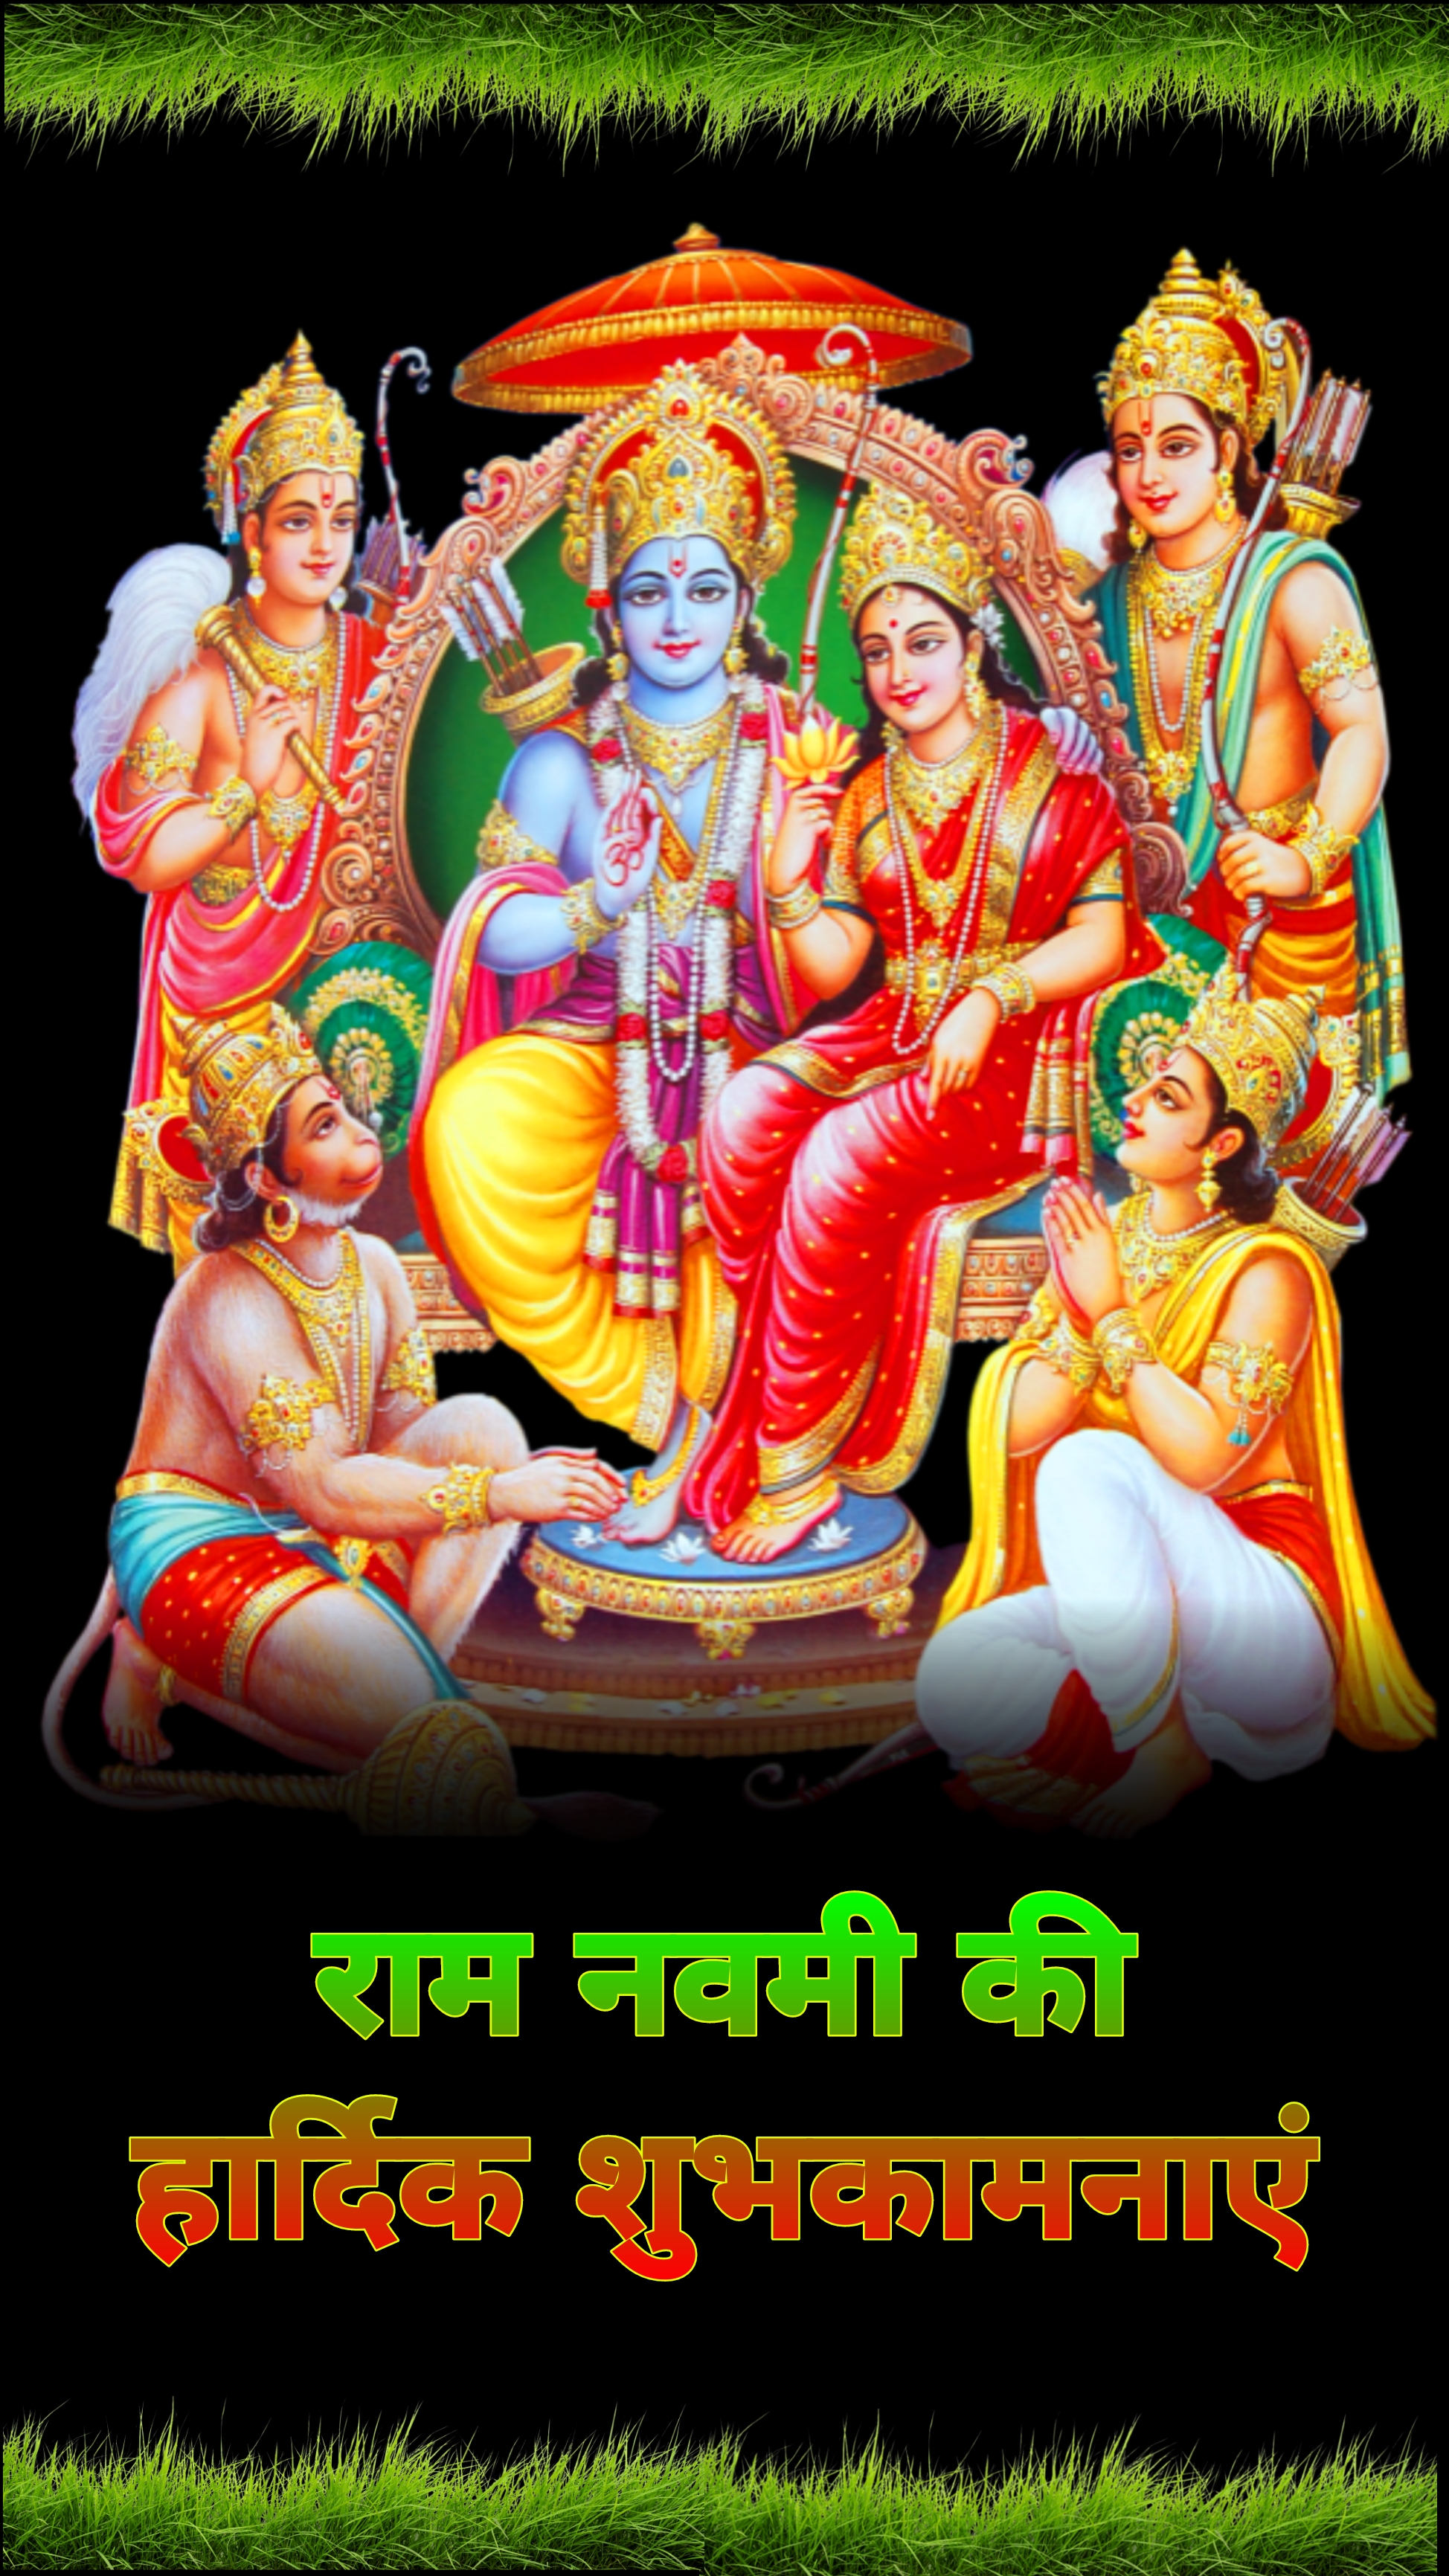 रामनवमी मोबाइल वॉलपेपर  Ram navami wallpaper for mobile